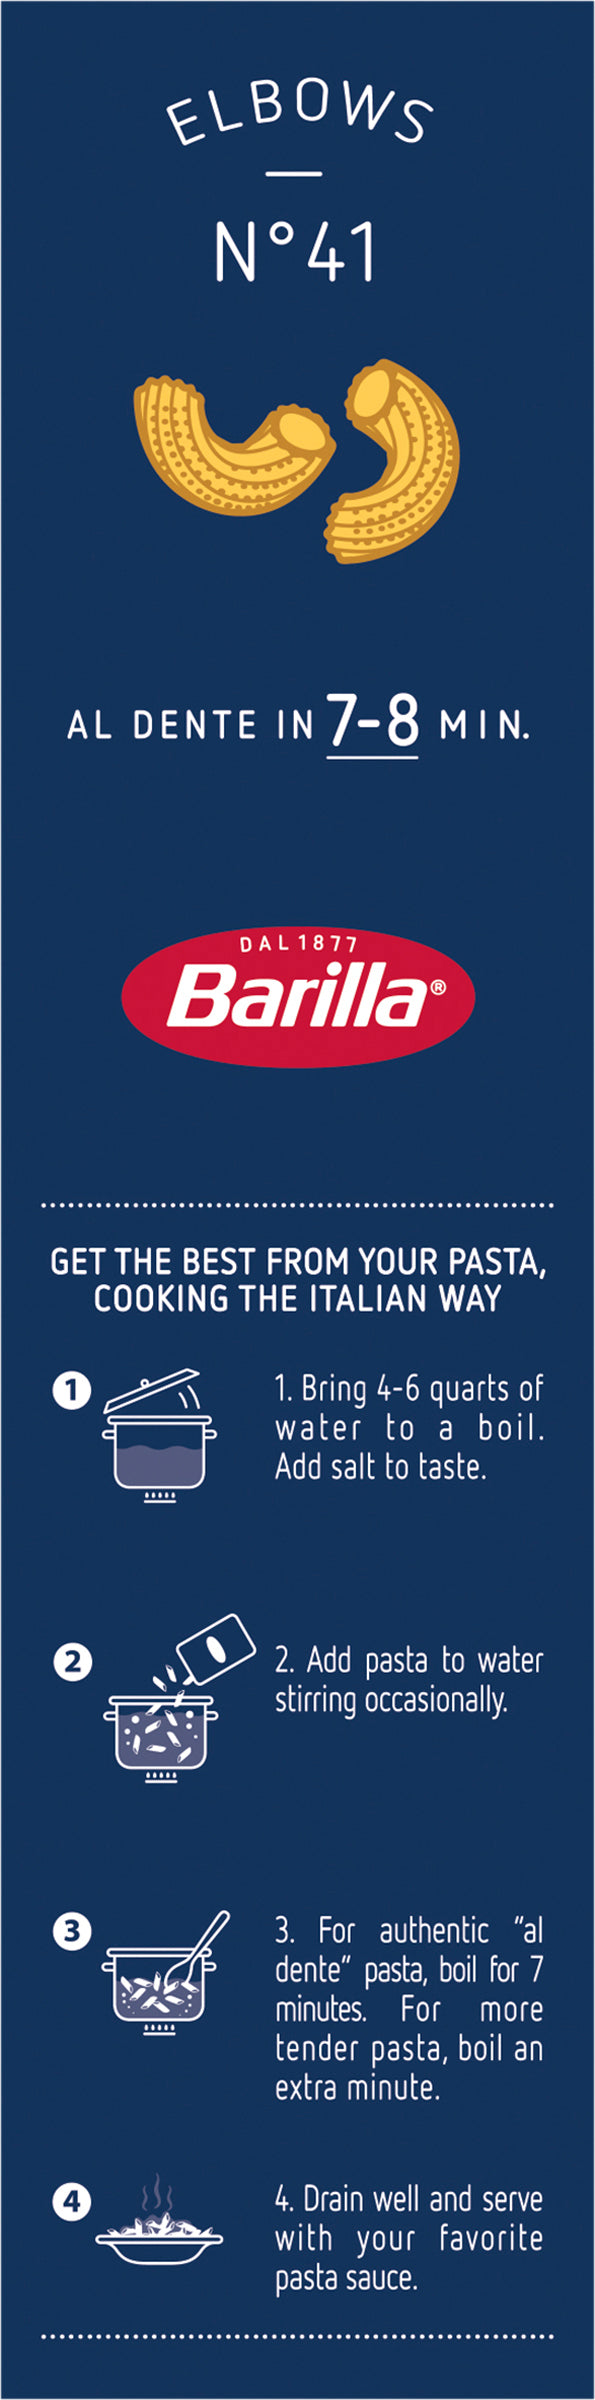 Barilla Elbow Pasta-16 oz.-16/Case